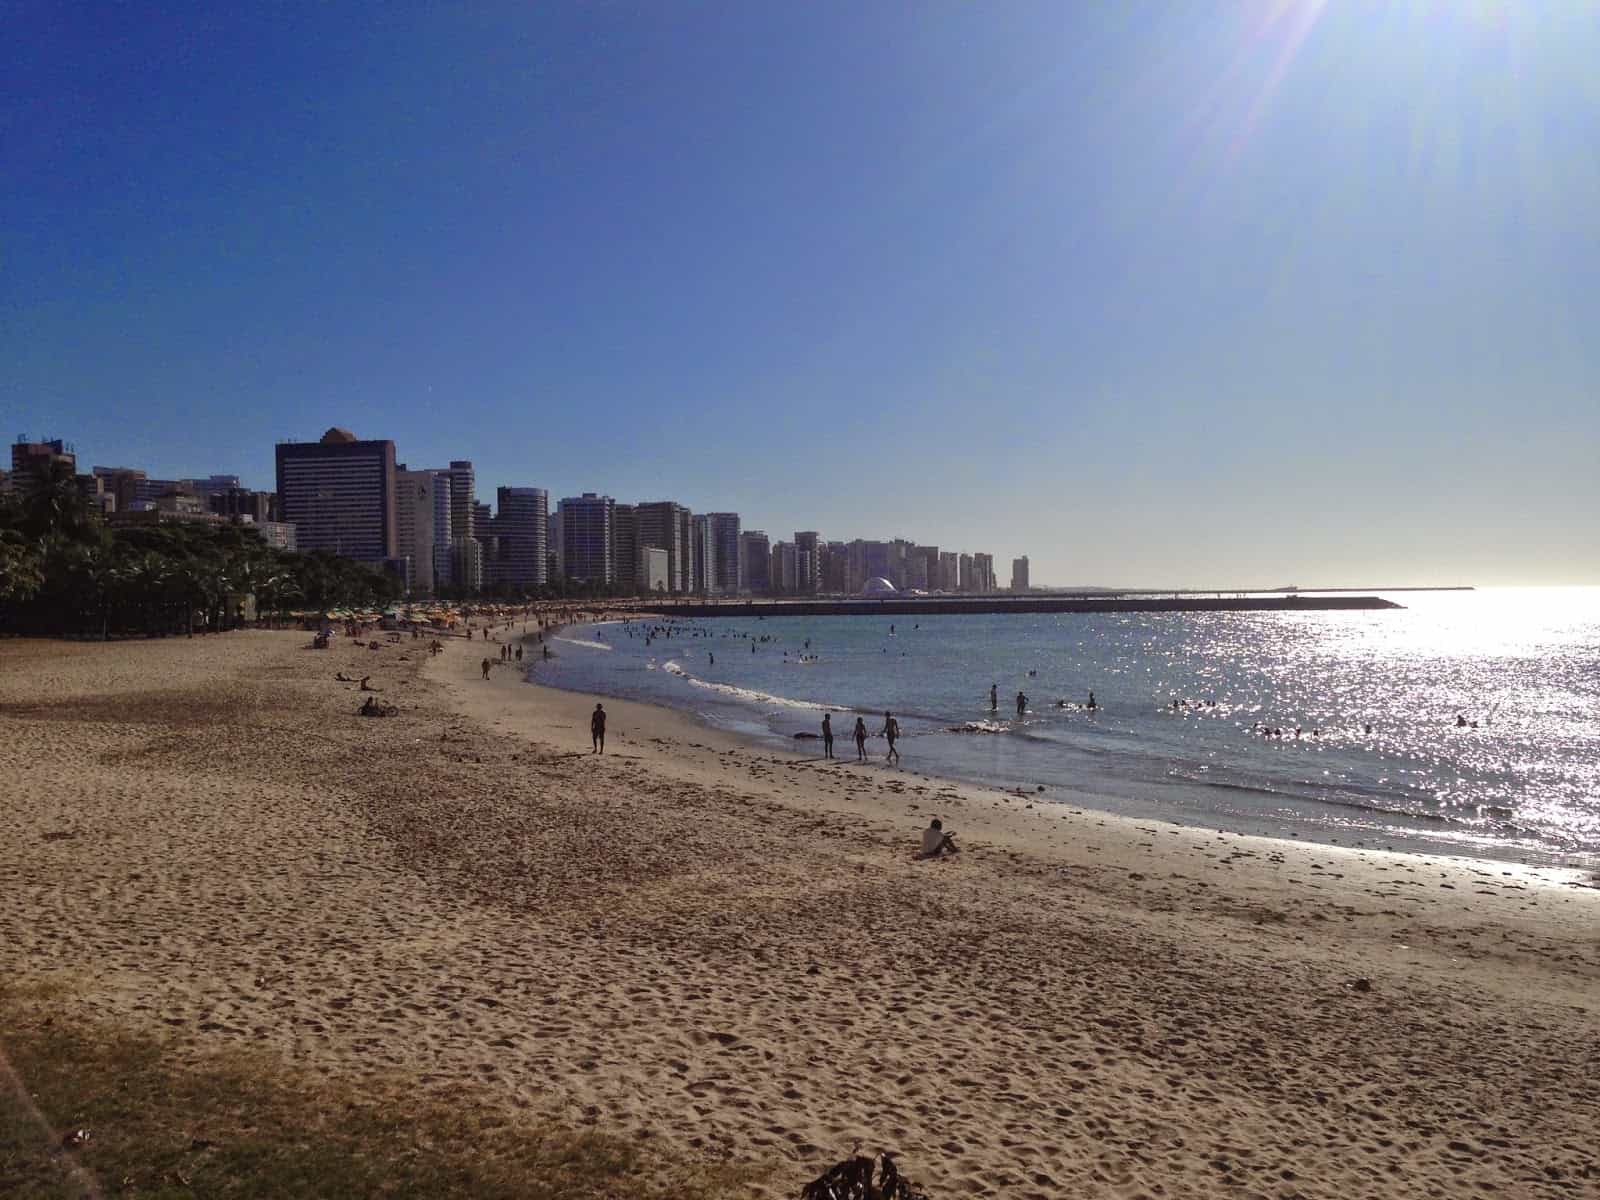 Praia de Meireles in Fortaleza, Brazil